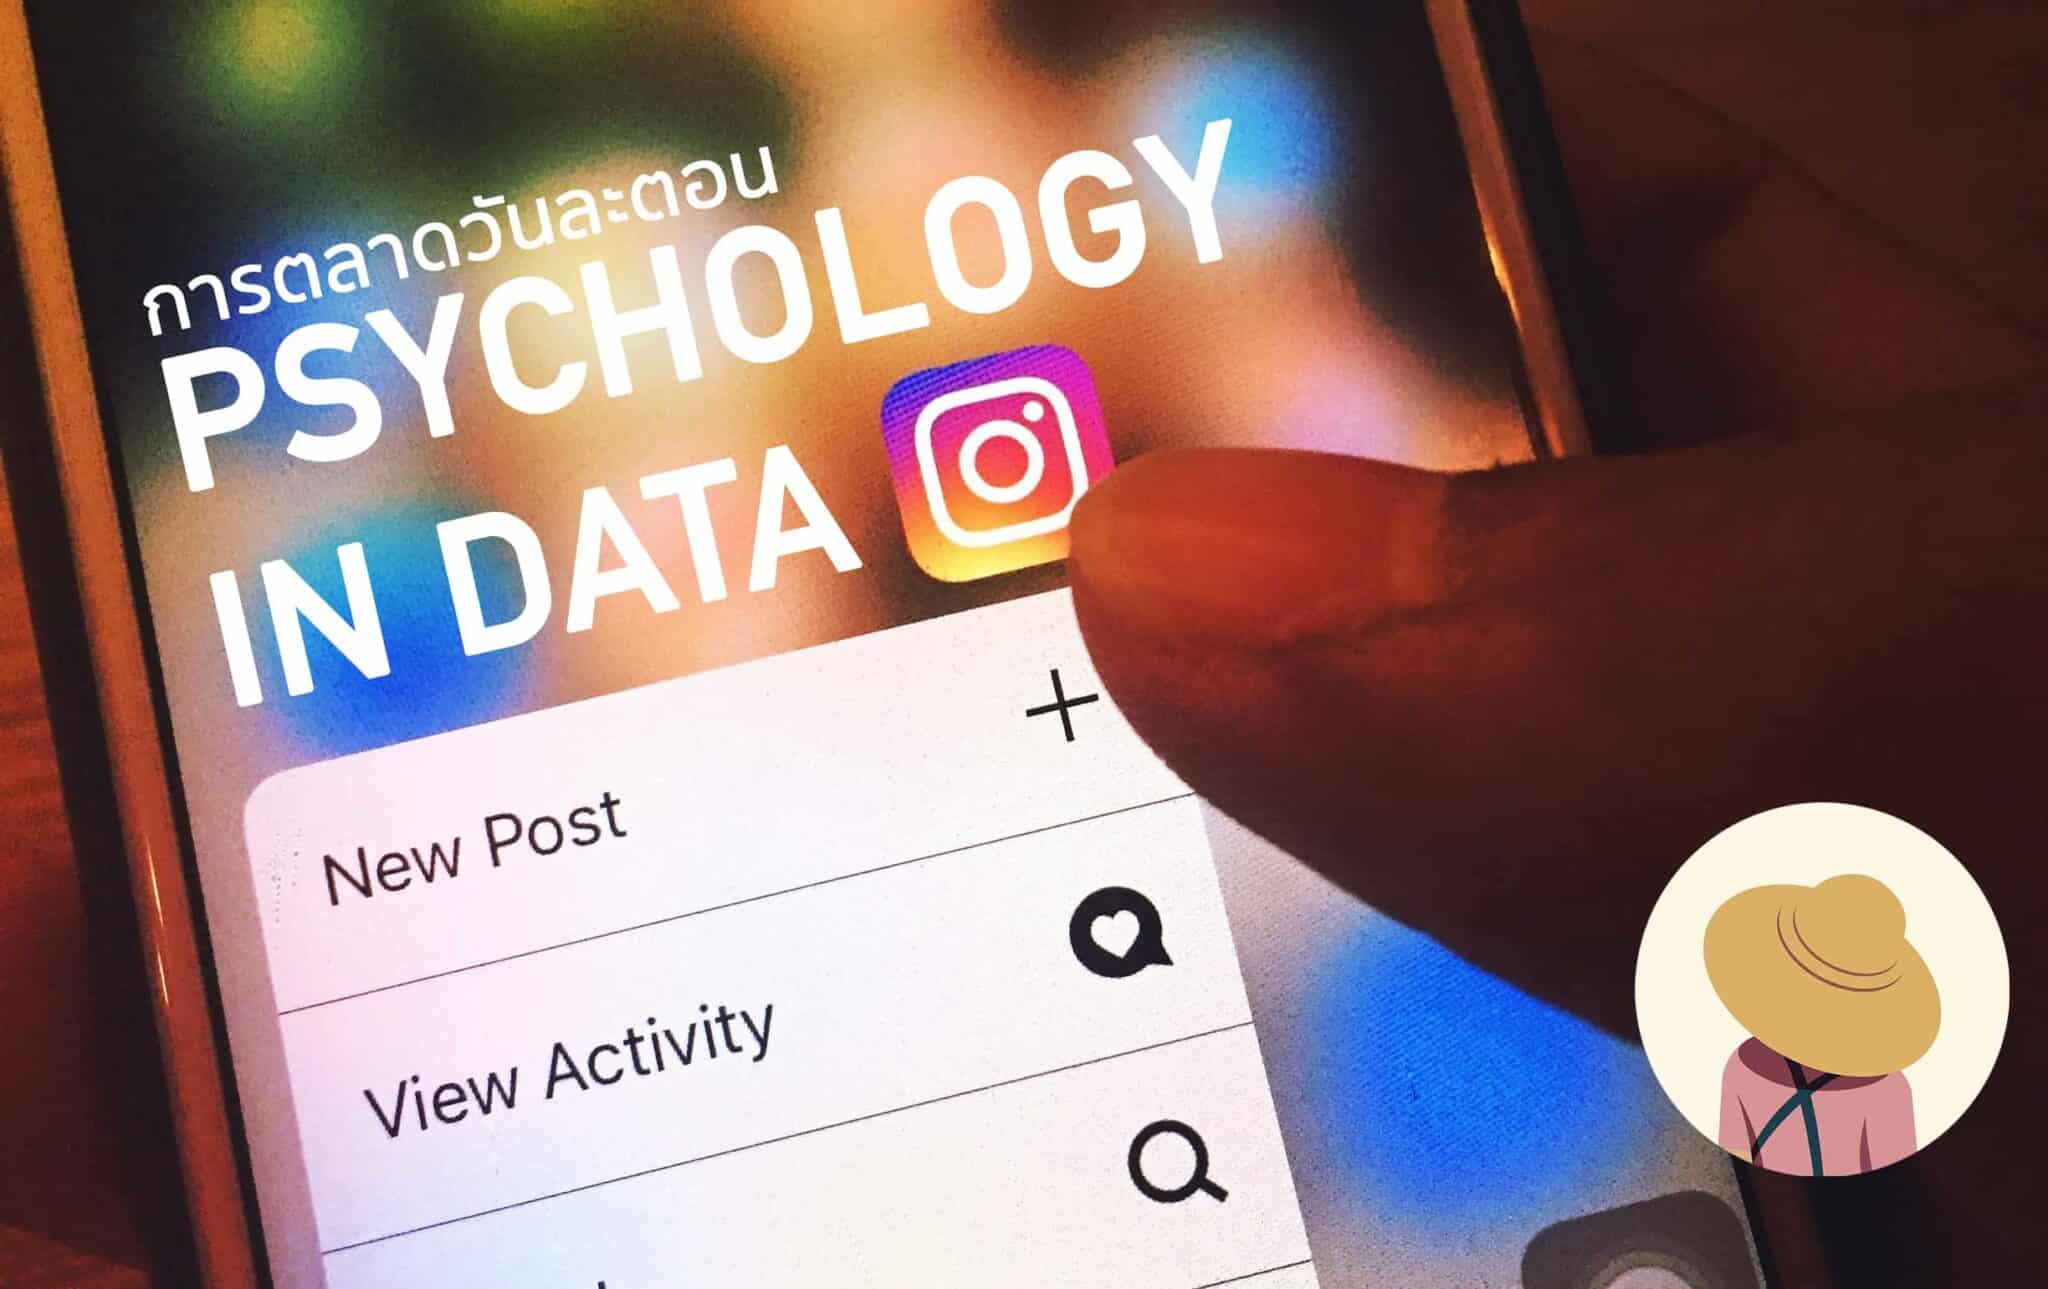 Psychology in Data แค่ดูรูปใน Instagram ก็รู้ว่าใครกำลังเป็นโรคซึมเศร้า